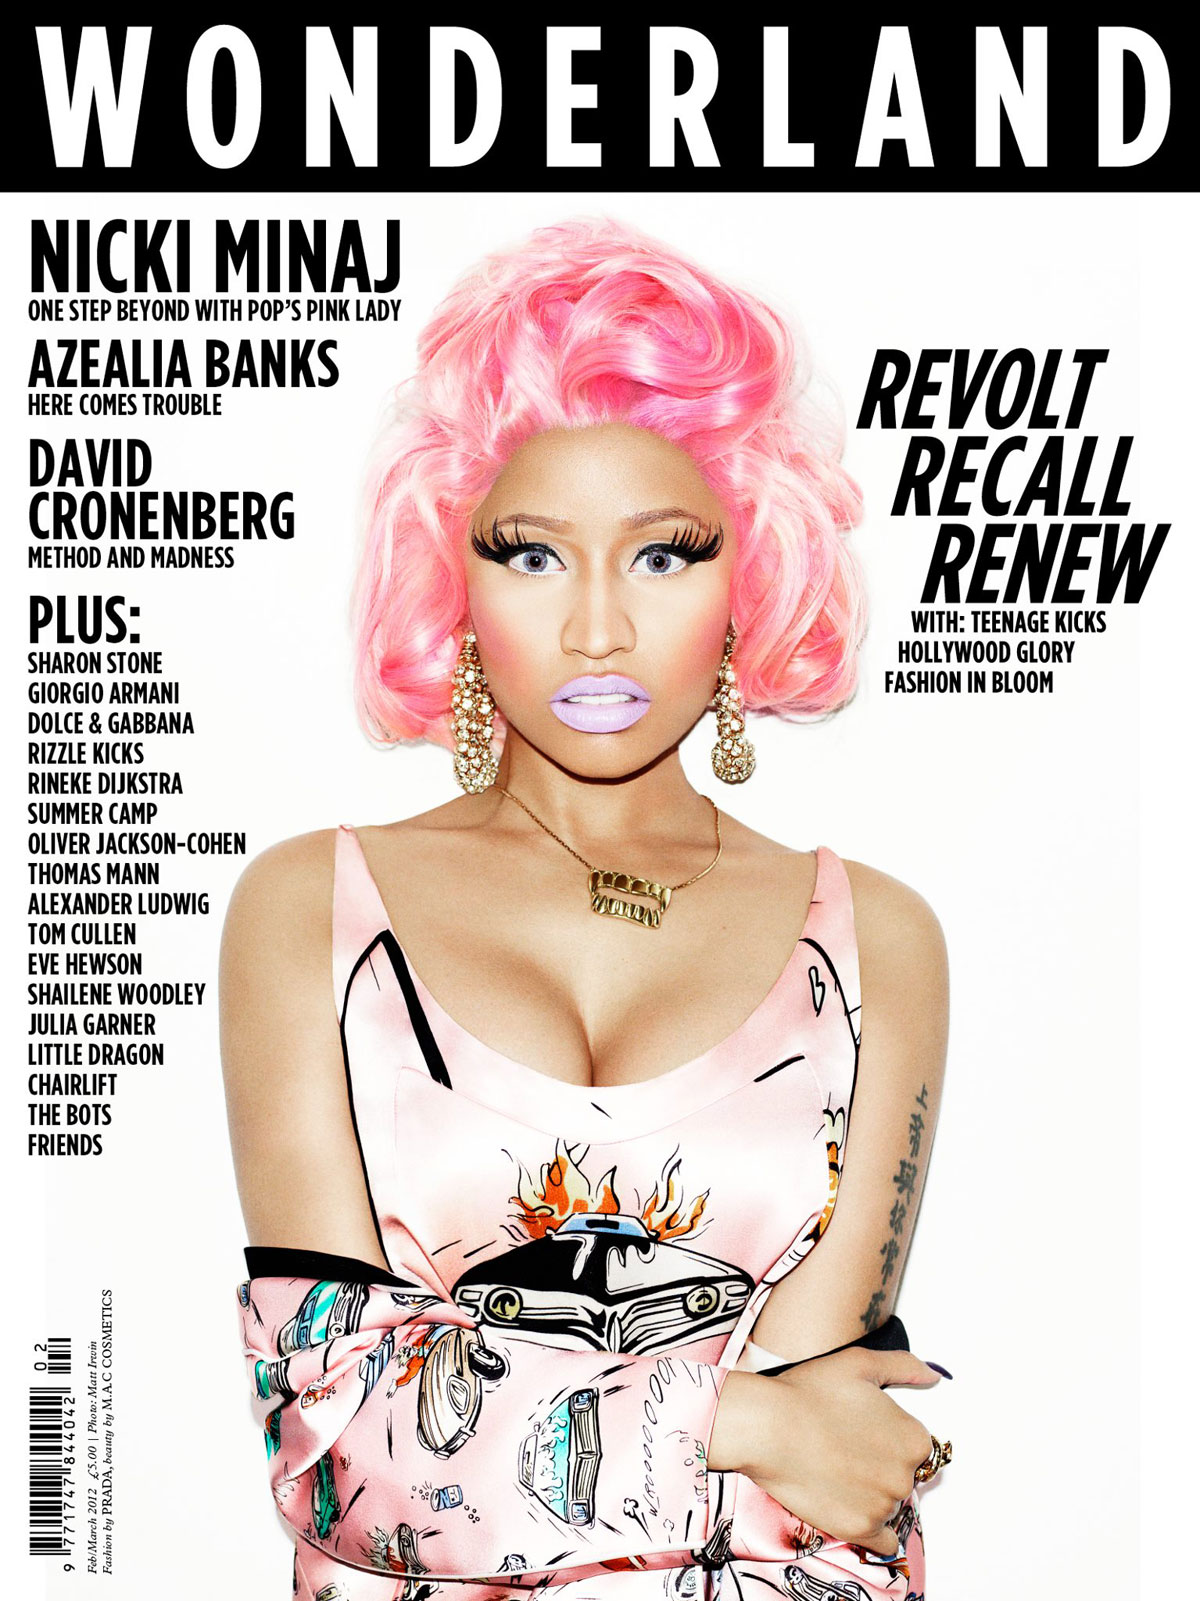 Nicki Minaj in PRADA for Wonderland Magazine